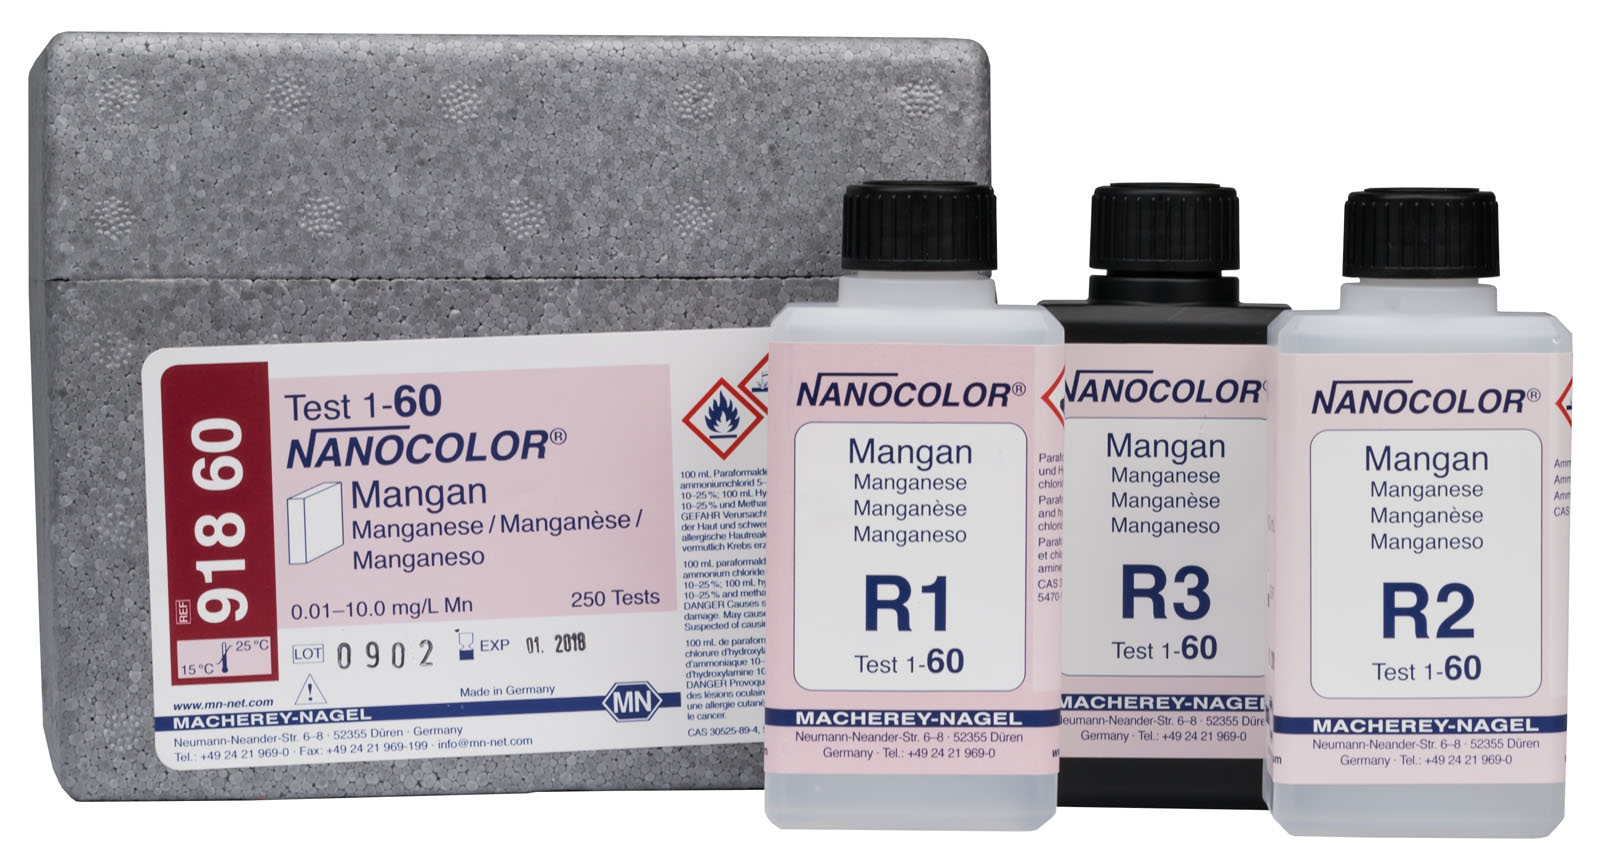 NANOCOLOR® Manganese Standard Test